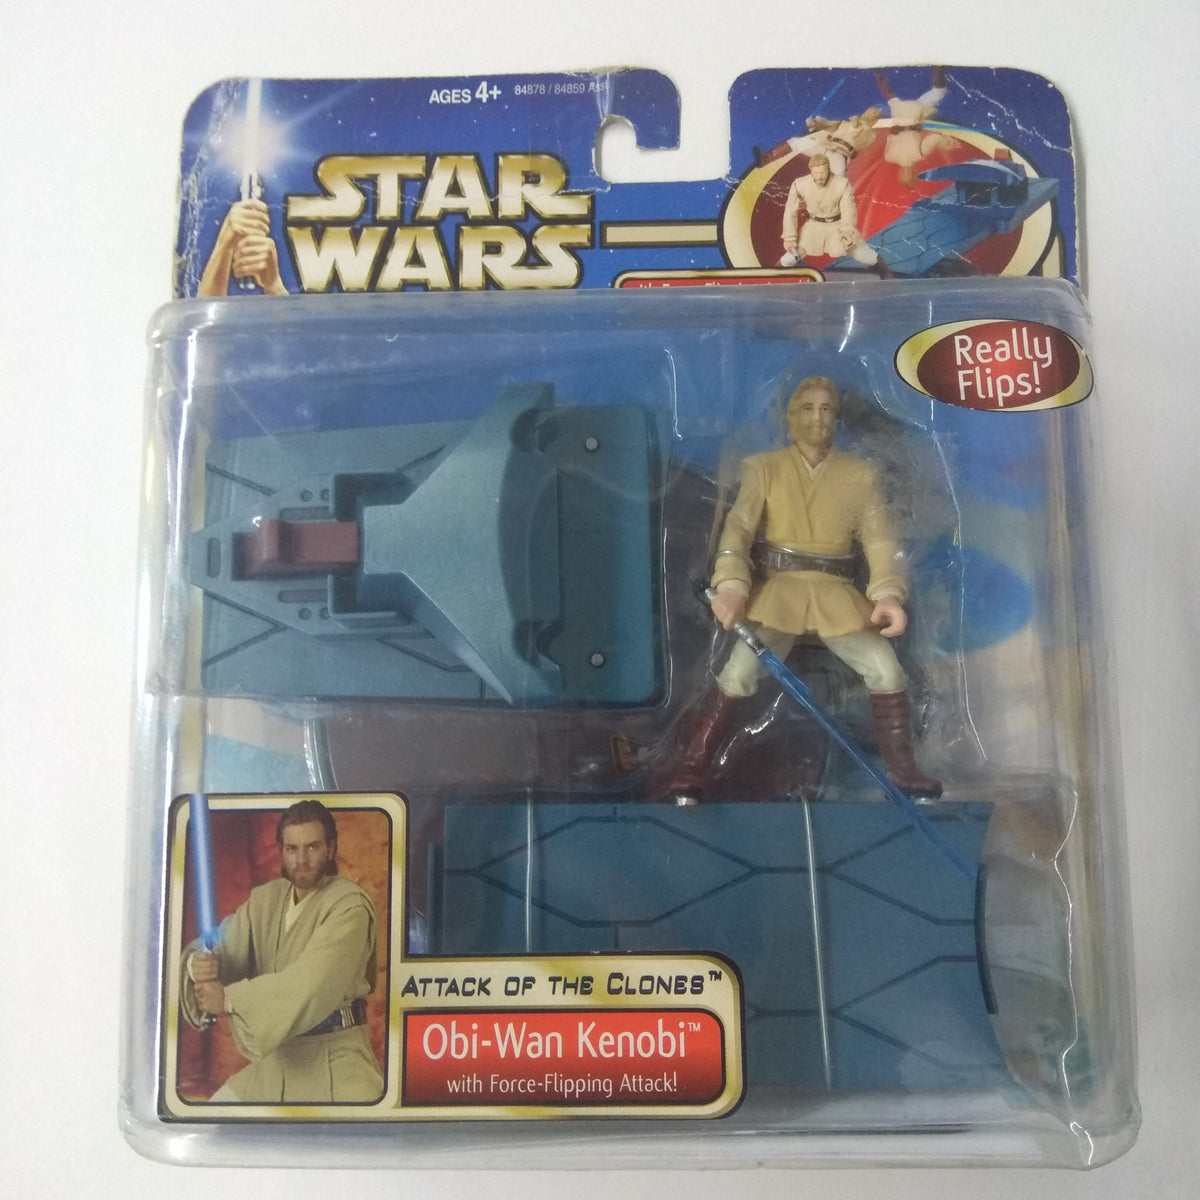 Obi-Wan Kenobi (With Force-Flipping Attack!)